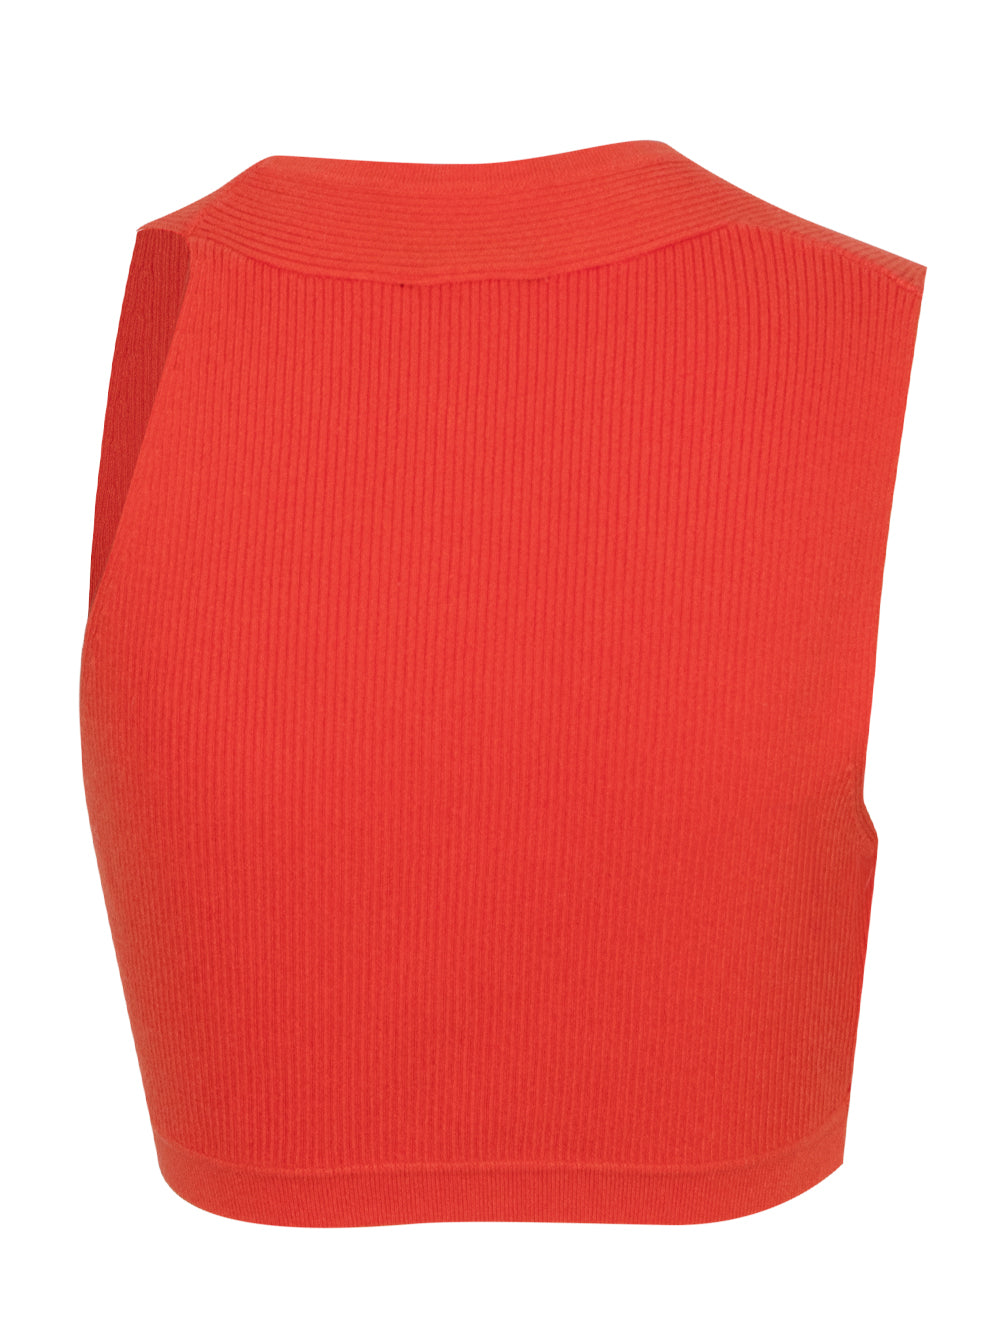 Sleeveless Knit Top (Orange)